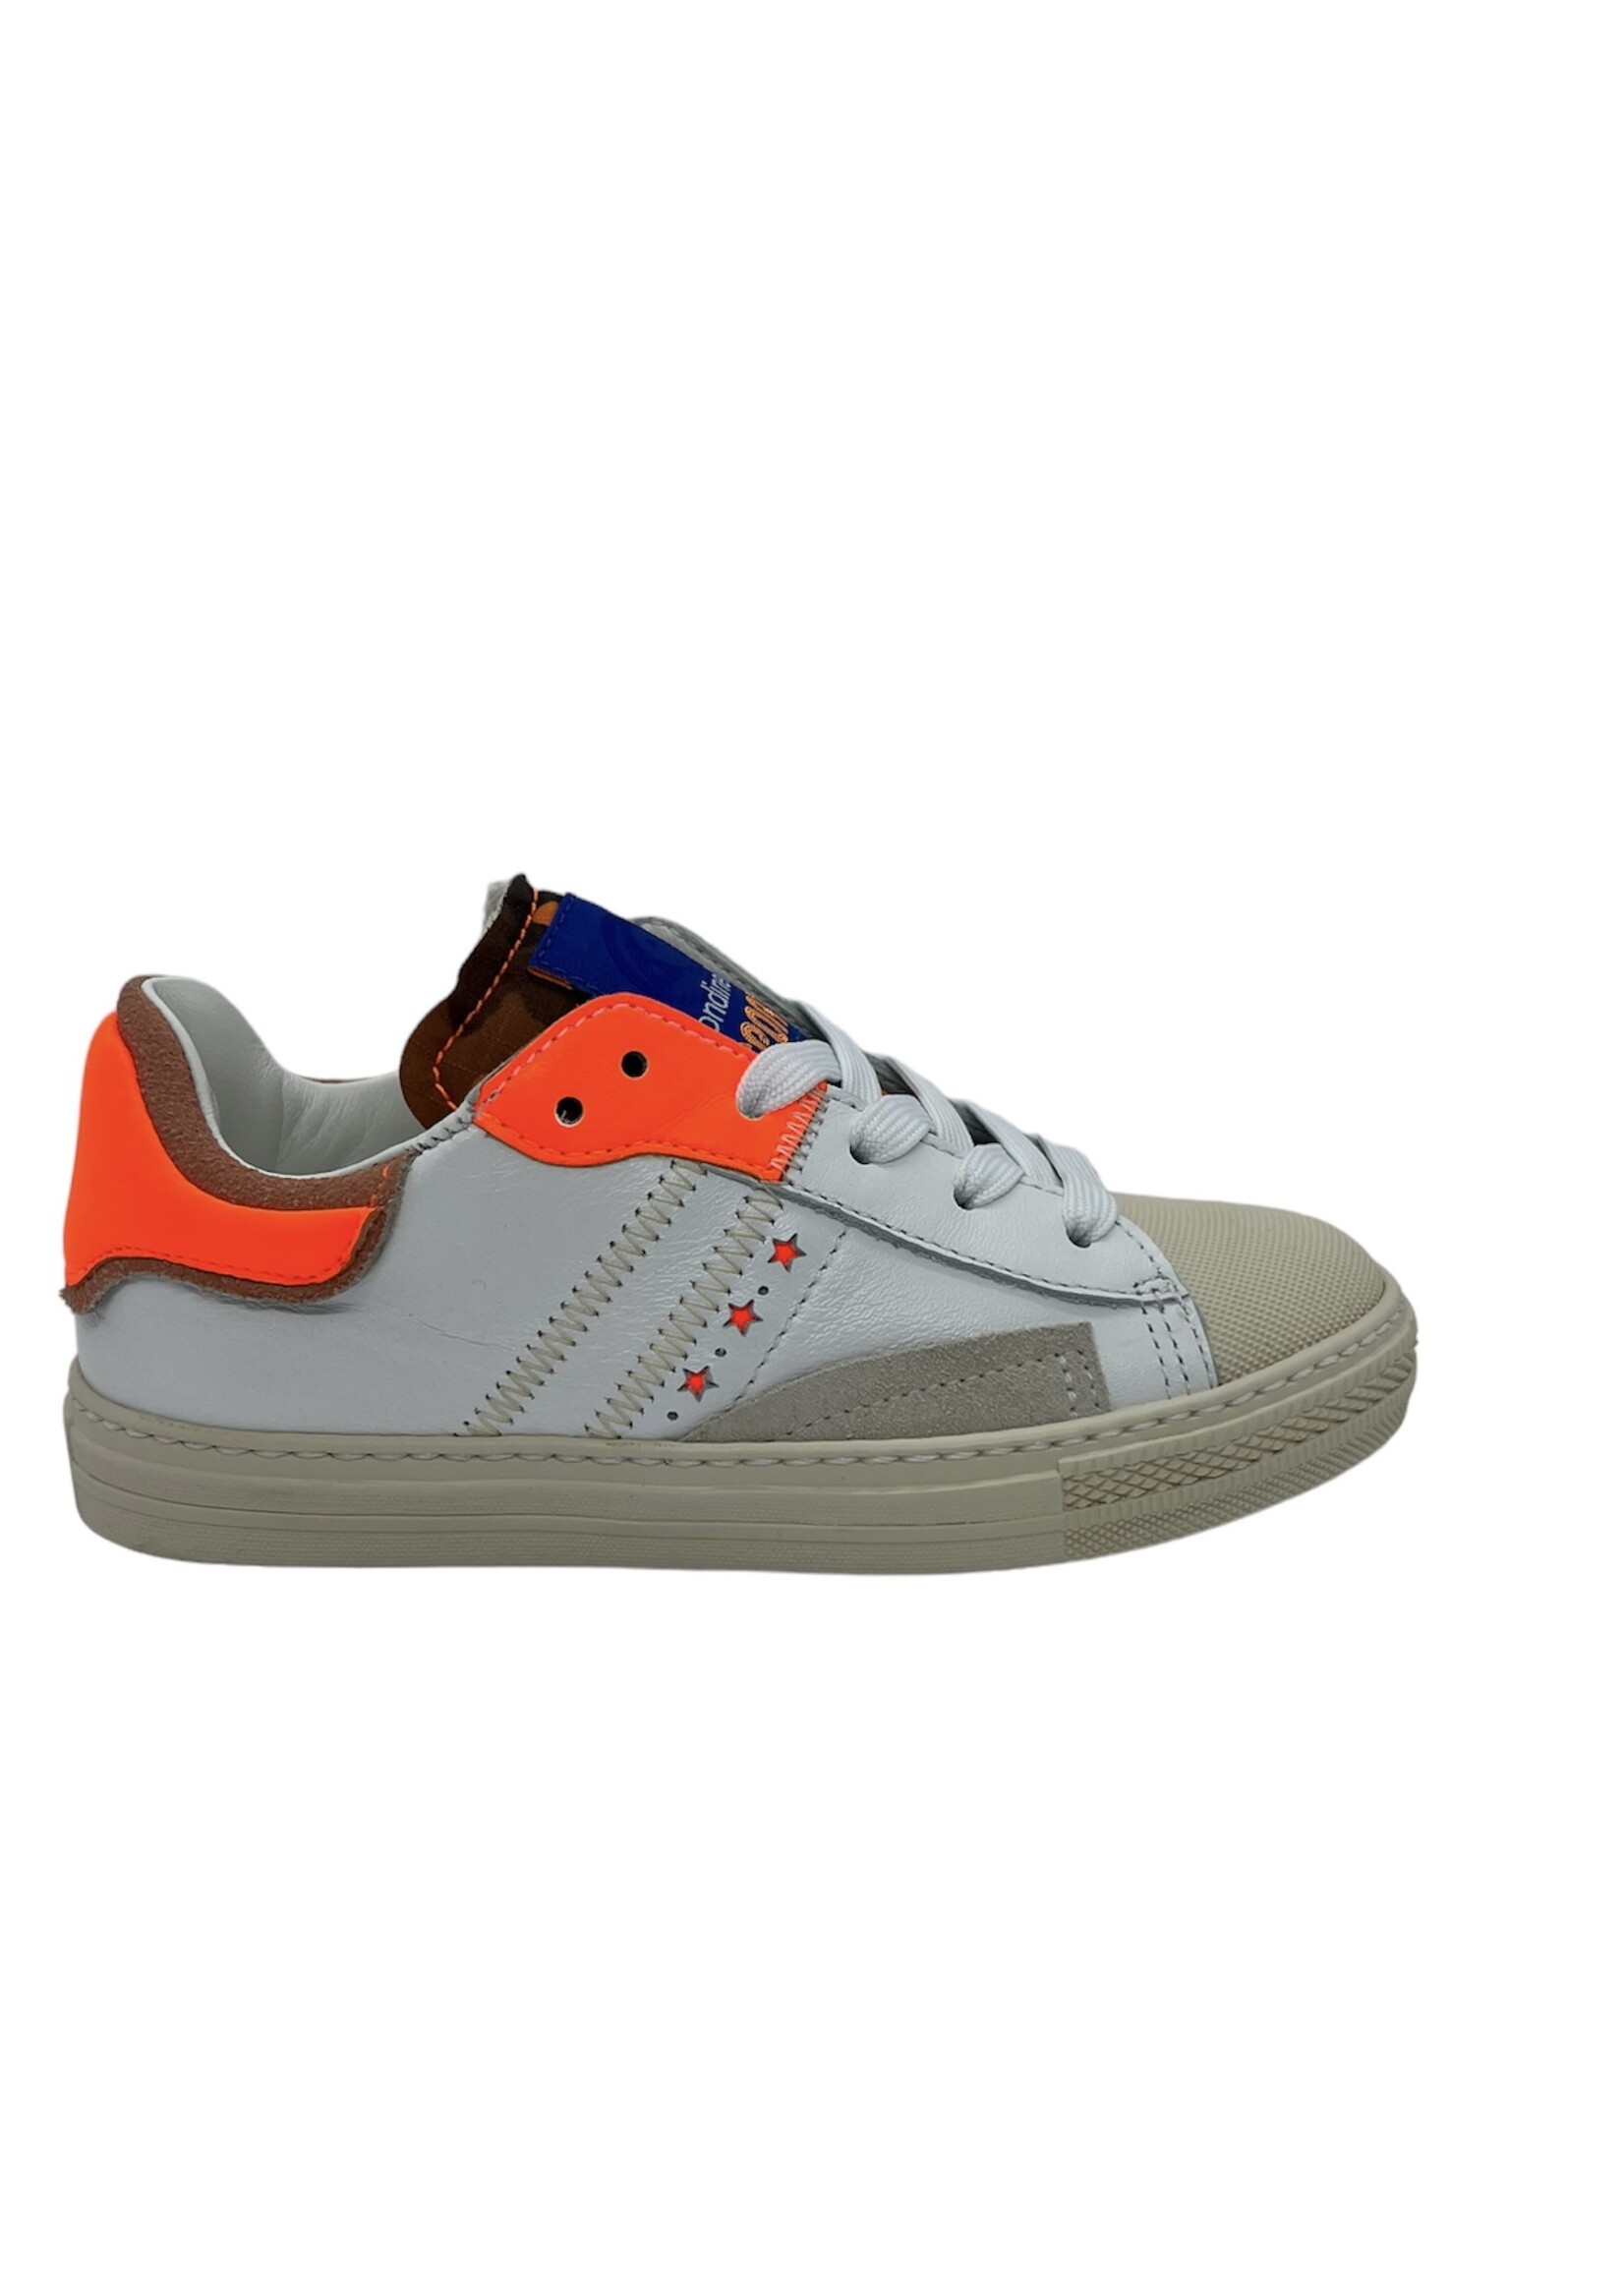 Rondinella 12067 sneaker wit oranje